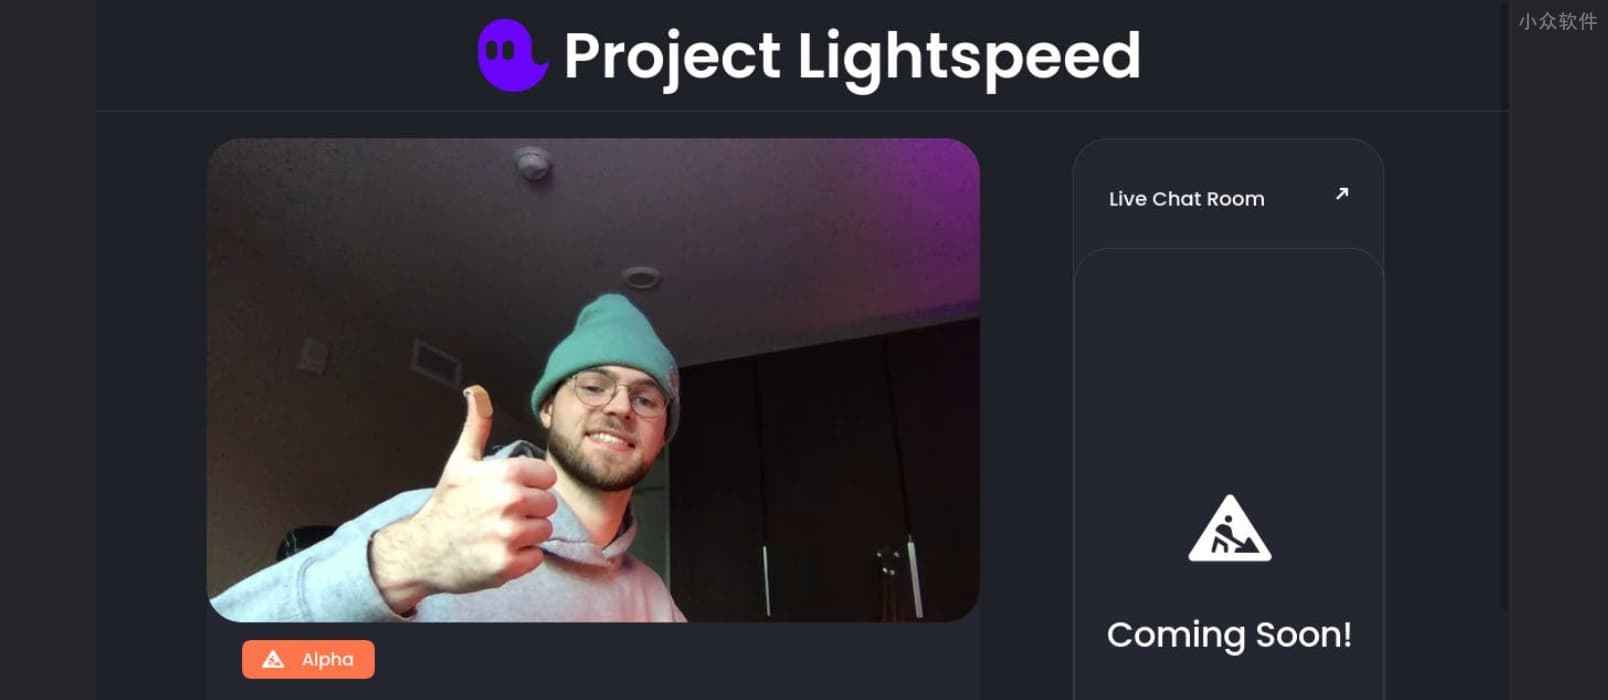 Project Lightspeed – 任何人都能部署的开源亚秒级延迟直播平台